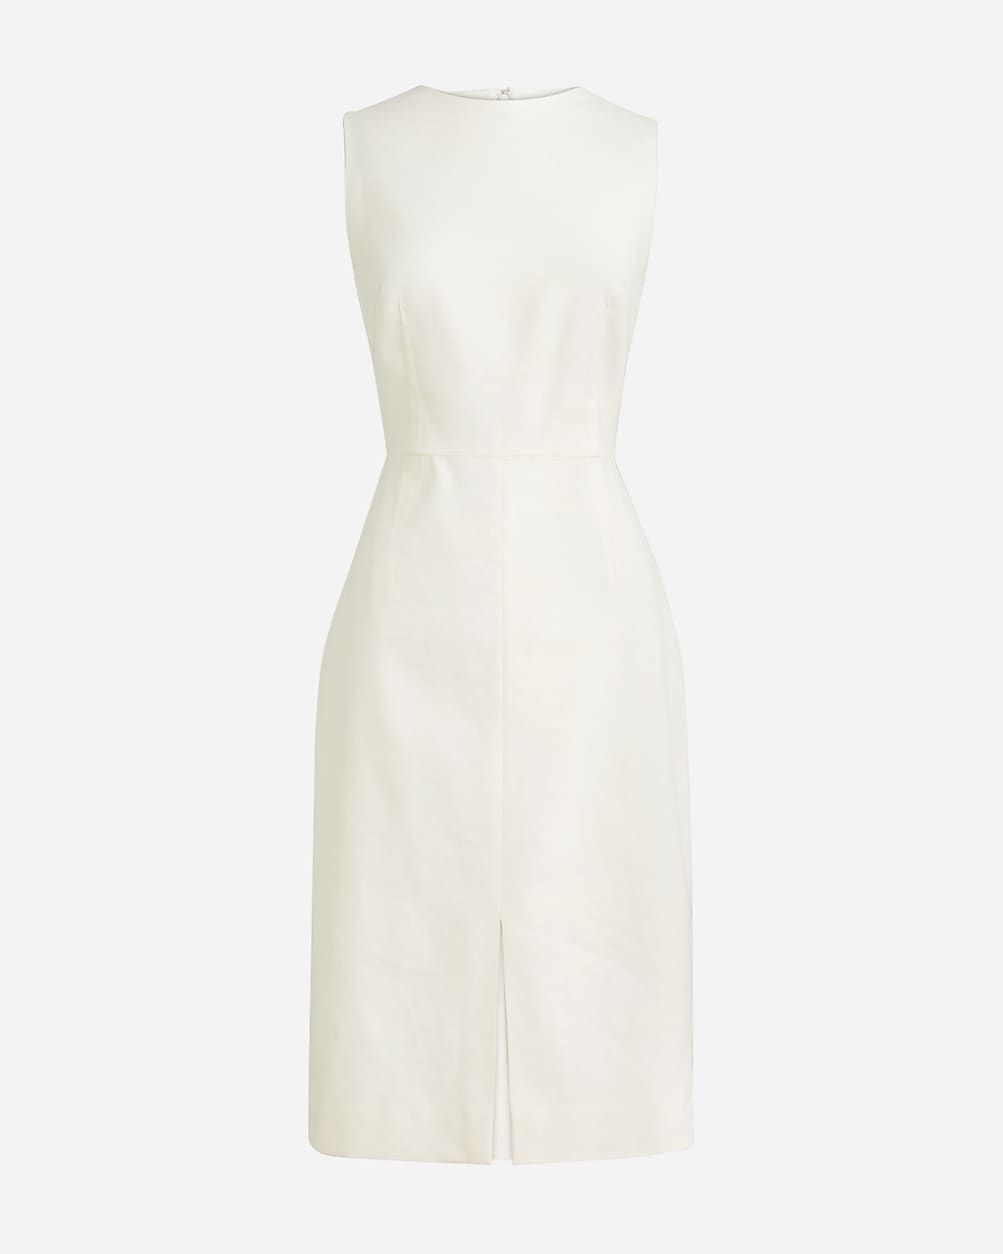 High-neck sheath dress in stretch linen blend | J.Crew US